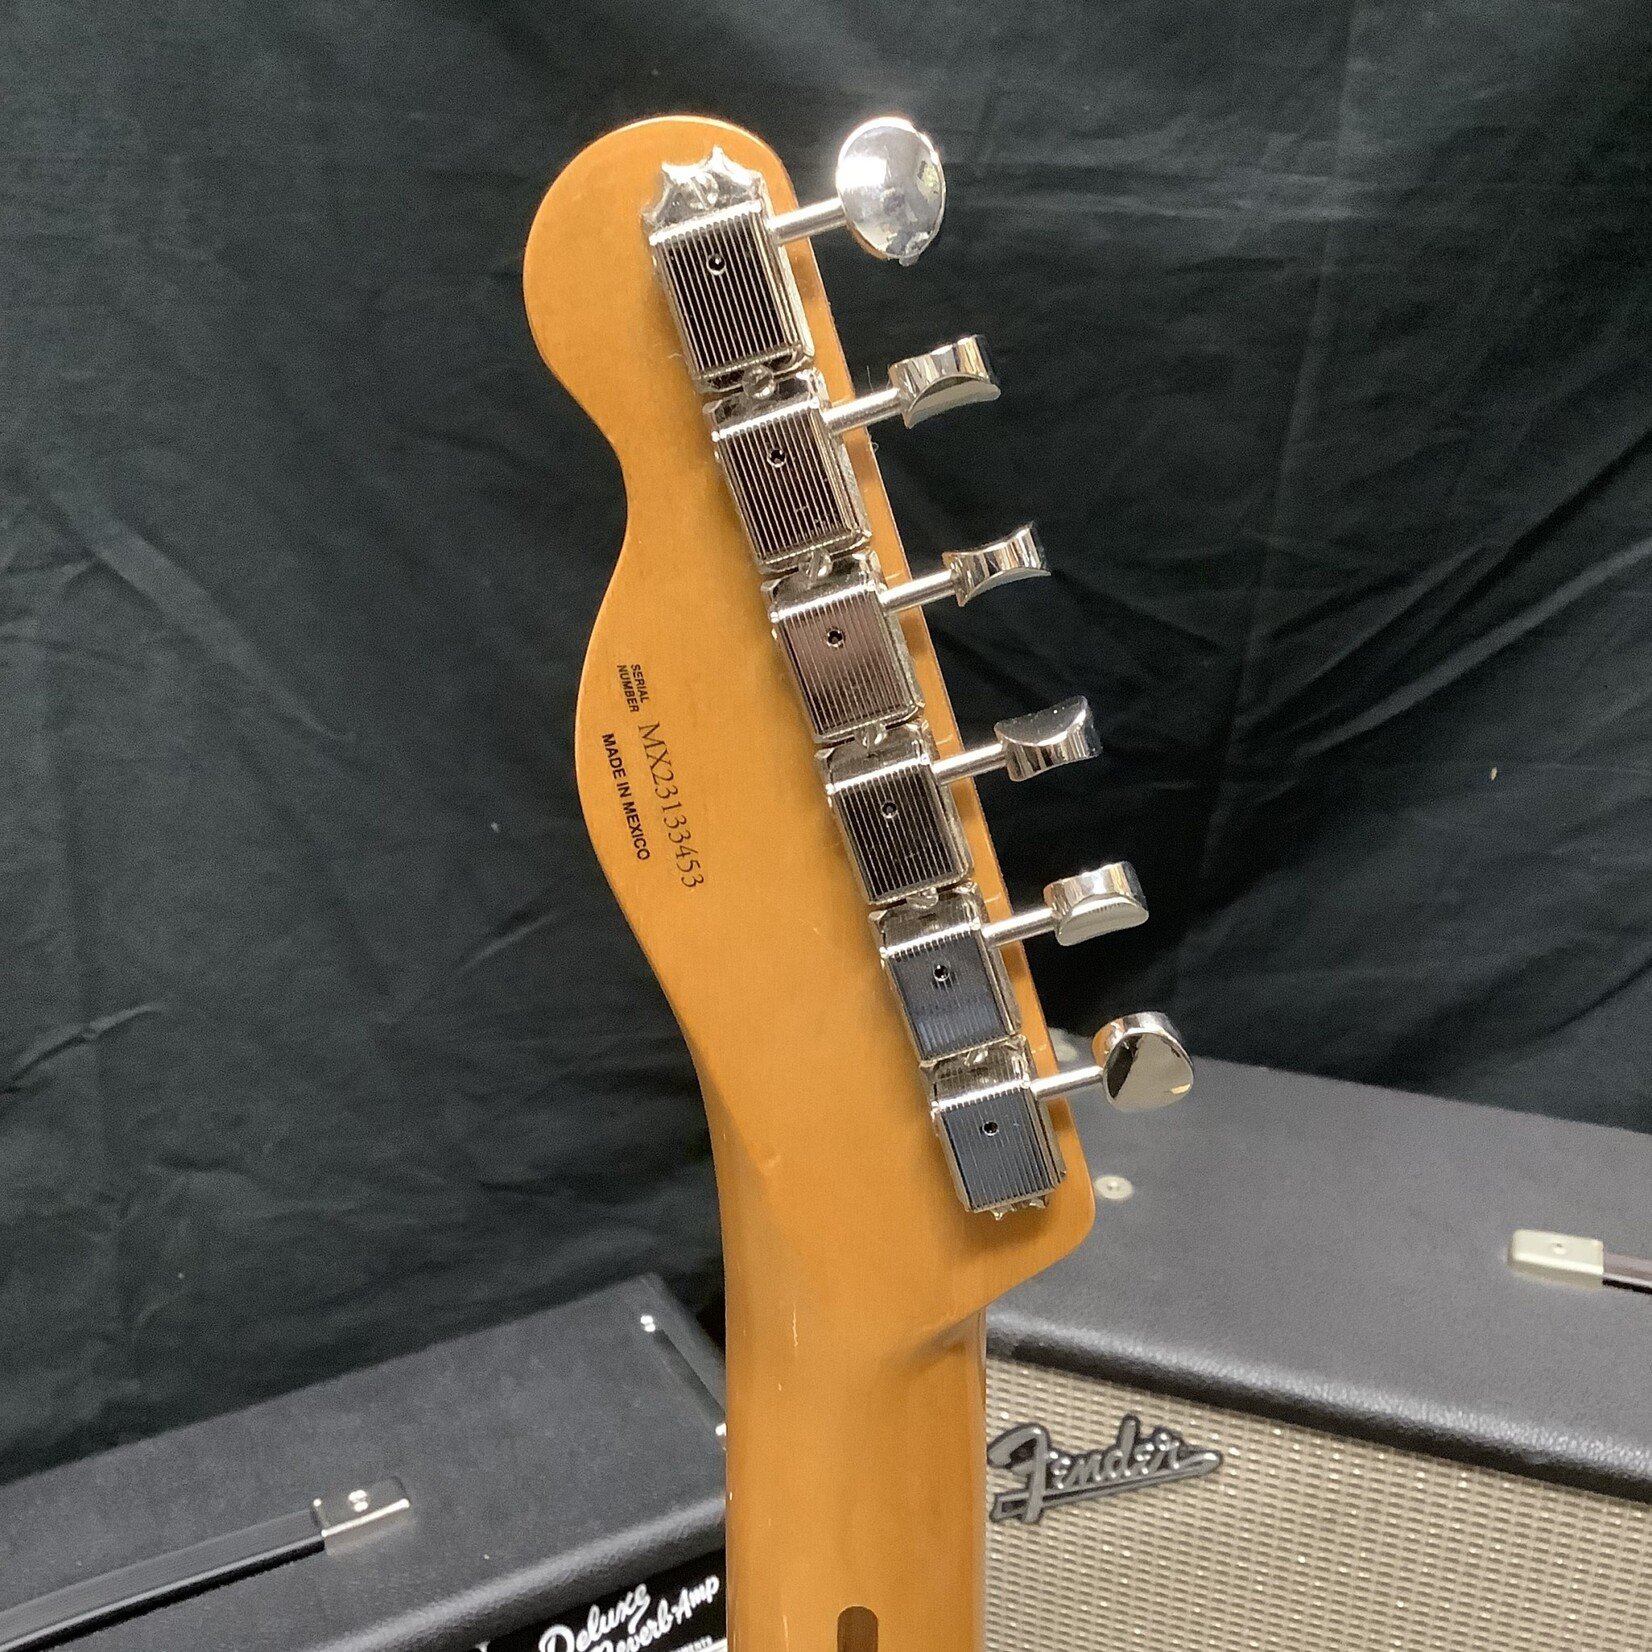 2023 Fender Vintera II '50s Nocaster Blackguard Blonde - Normans